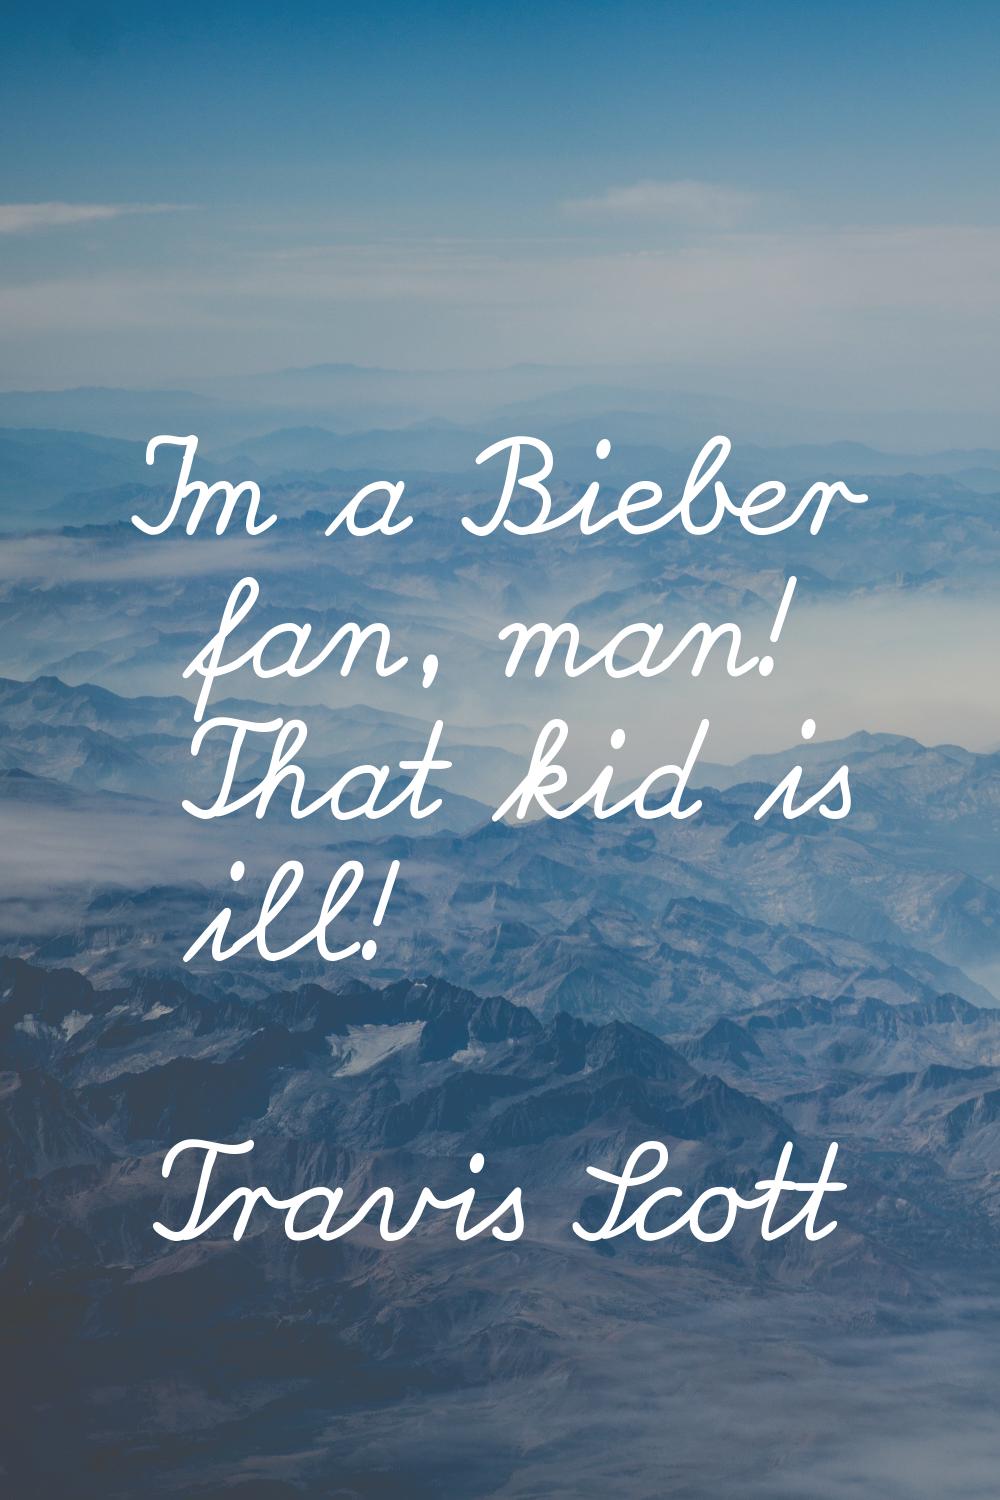 I'm a Bieber fan, man! That kid is ill!